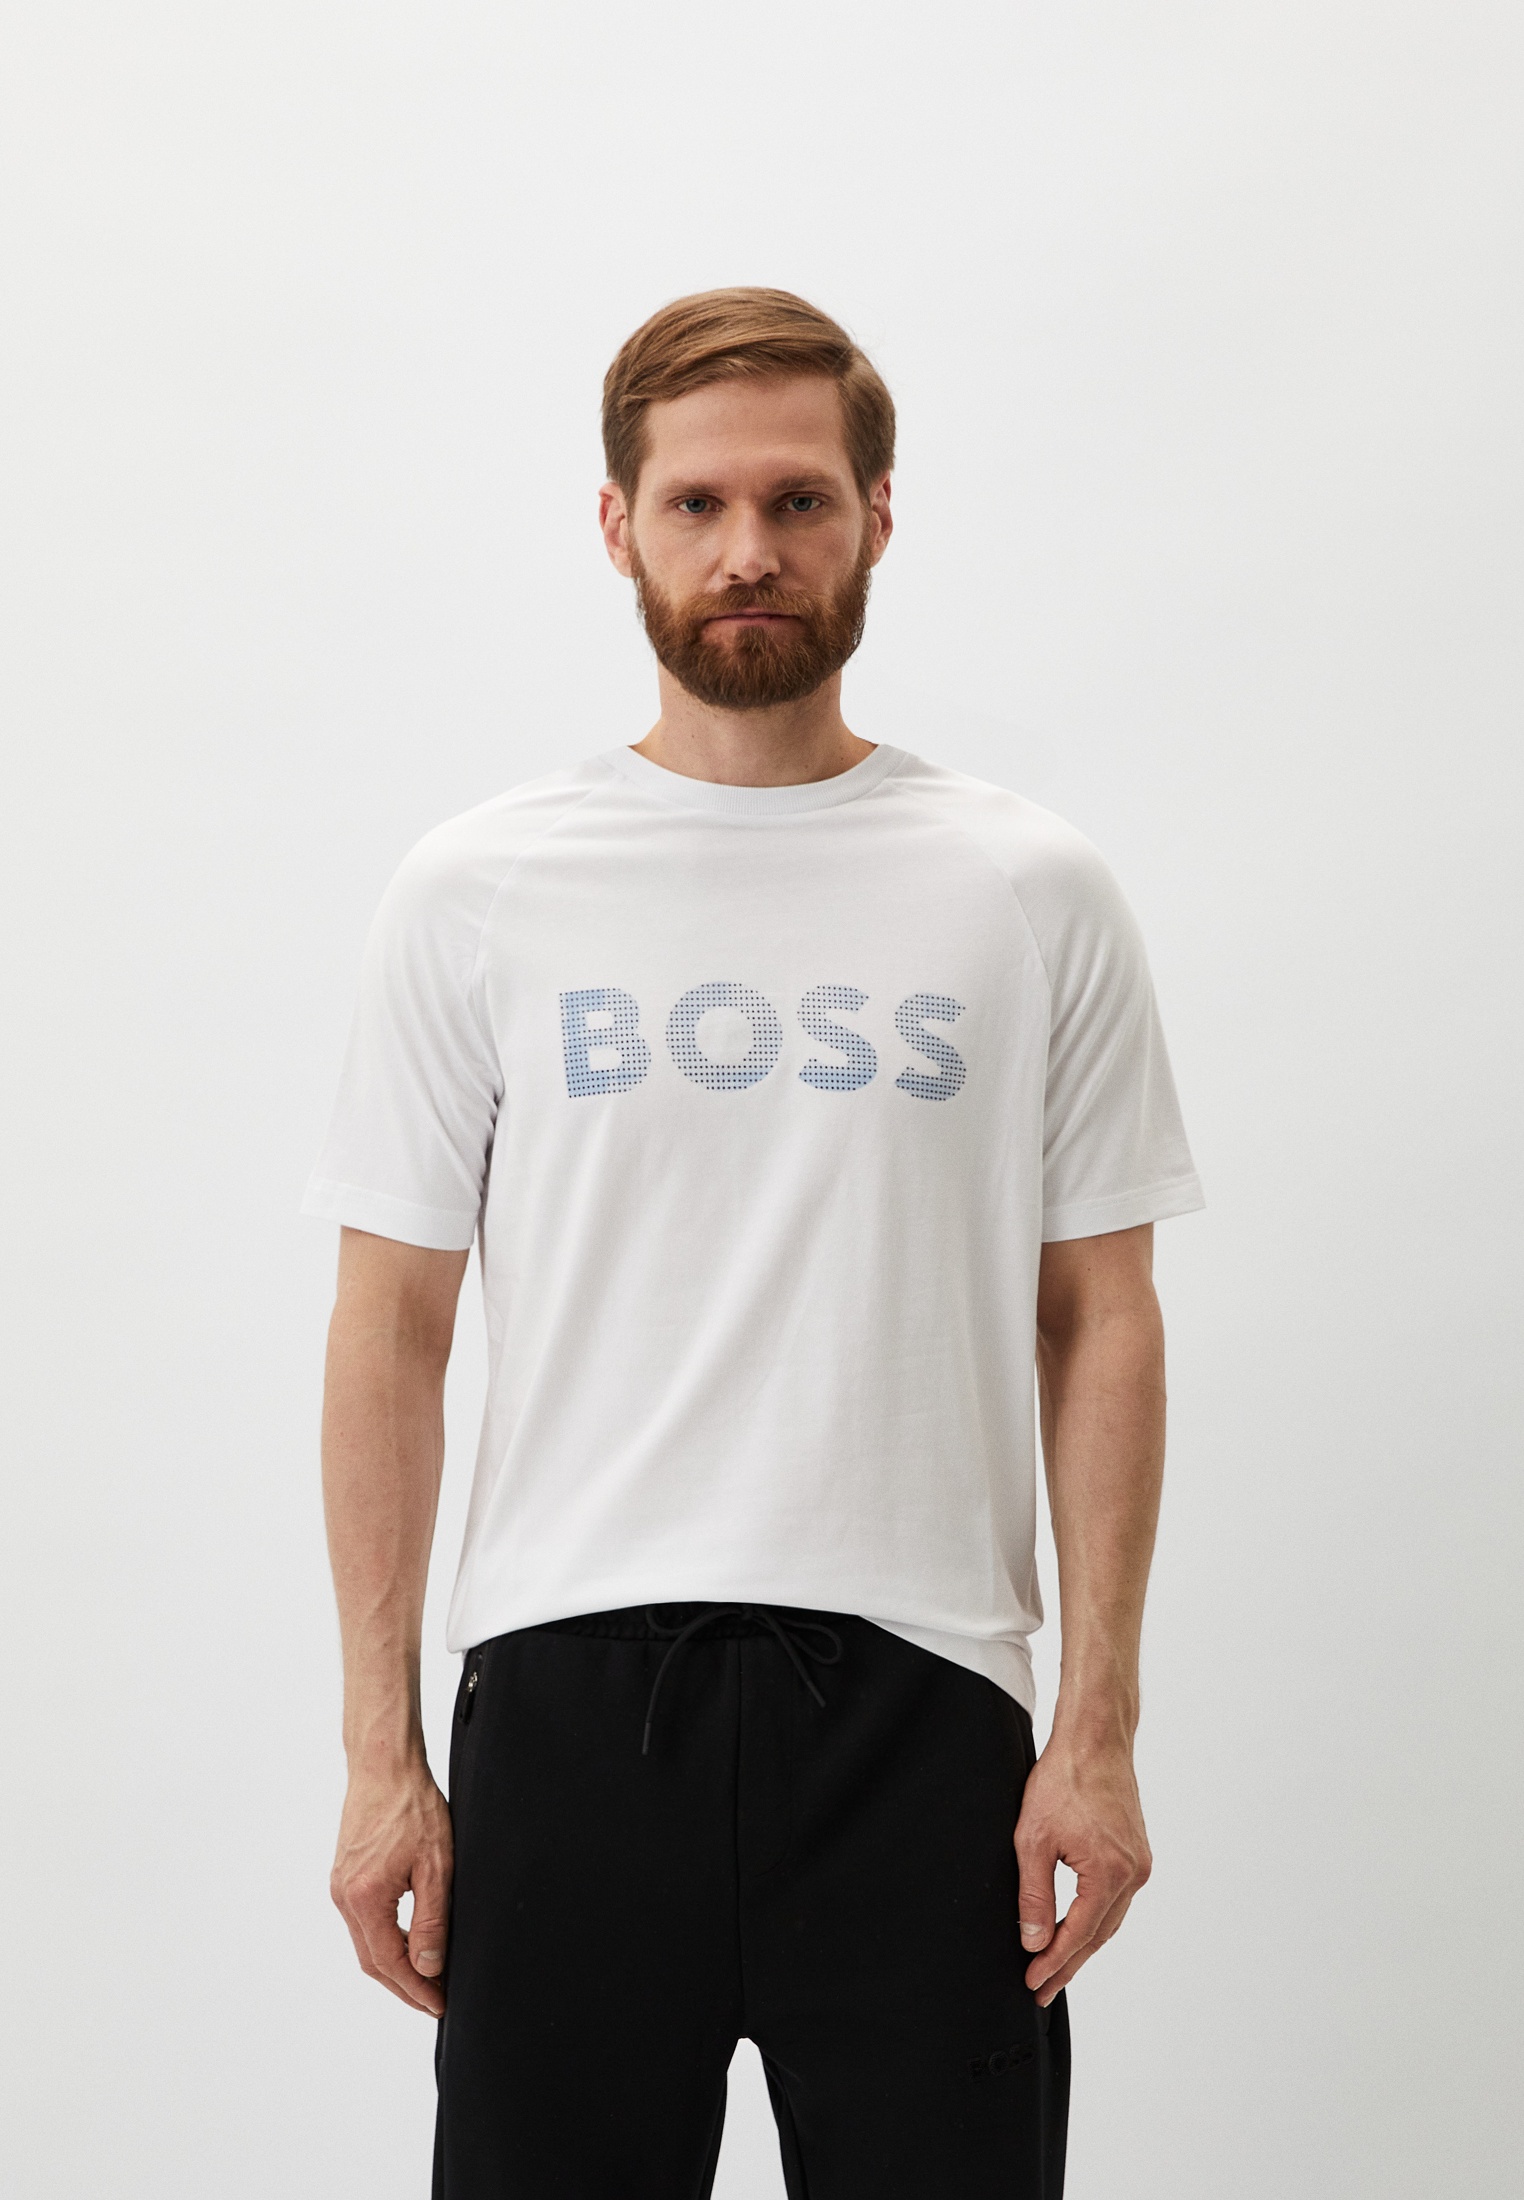 Мужская футболка Boss (Босс) 50512999